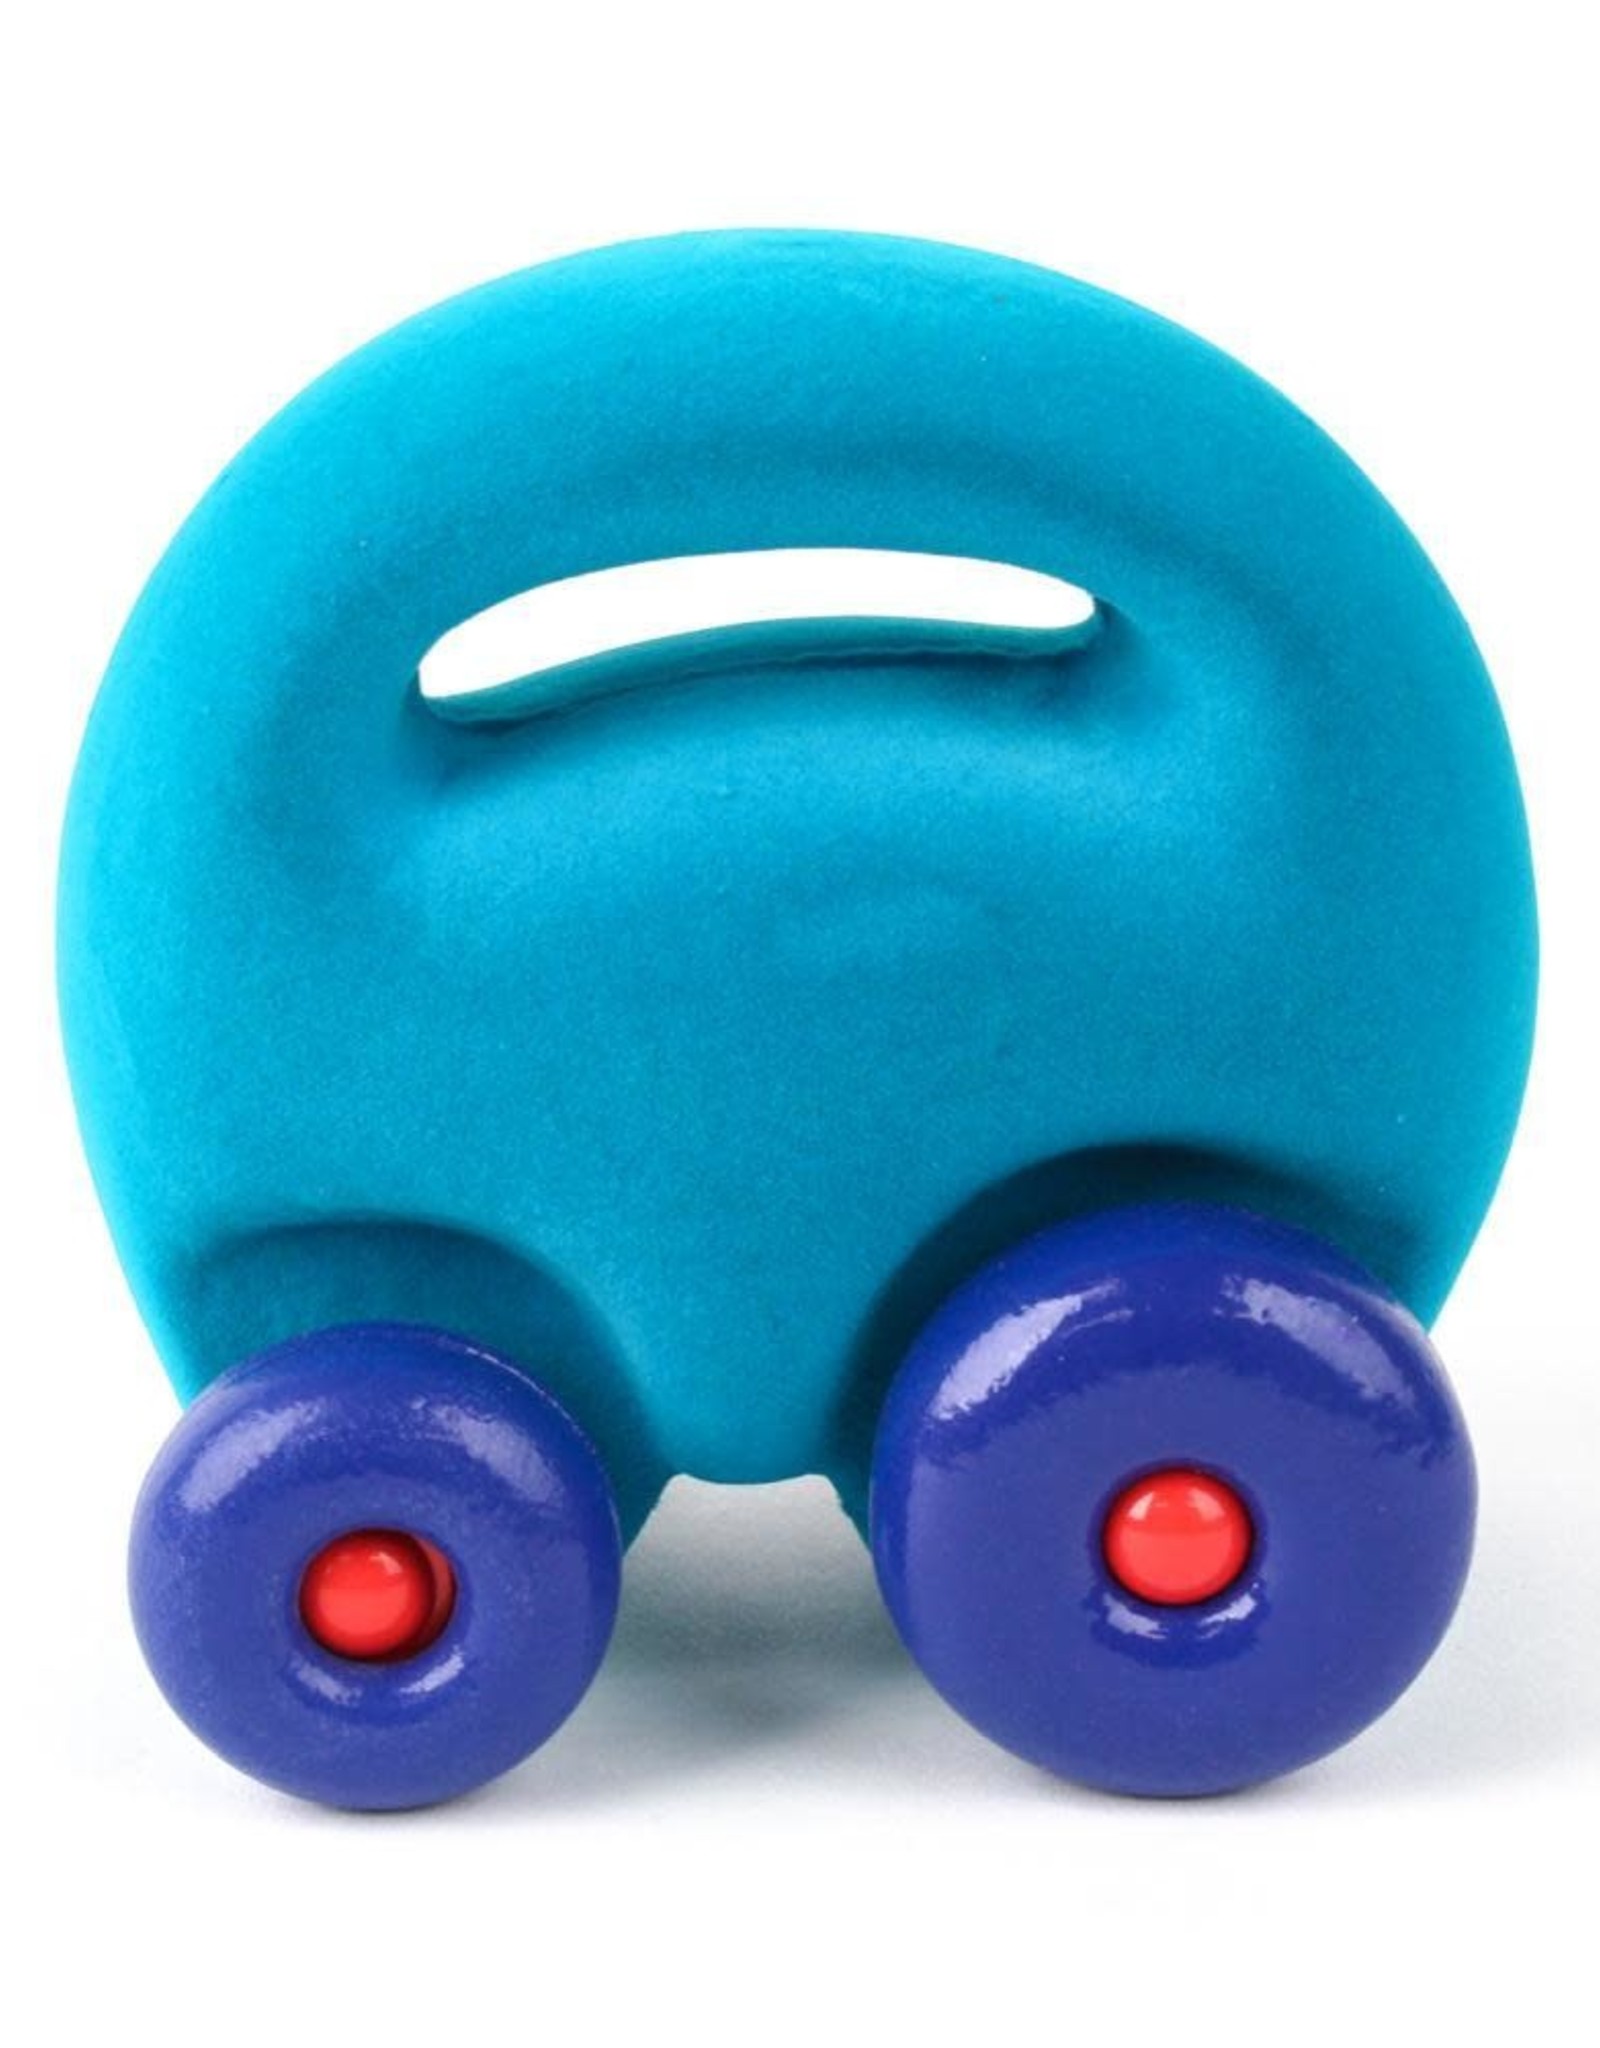 Rubbabu The Mascot Car Grab'em, Turquoise